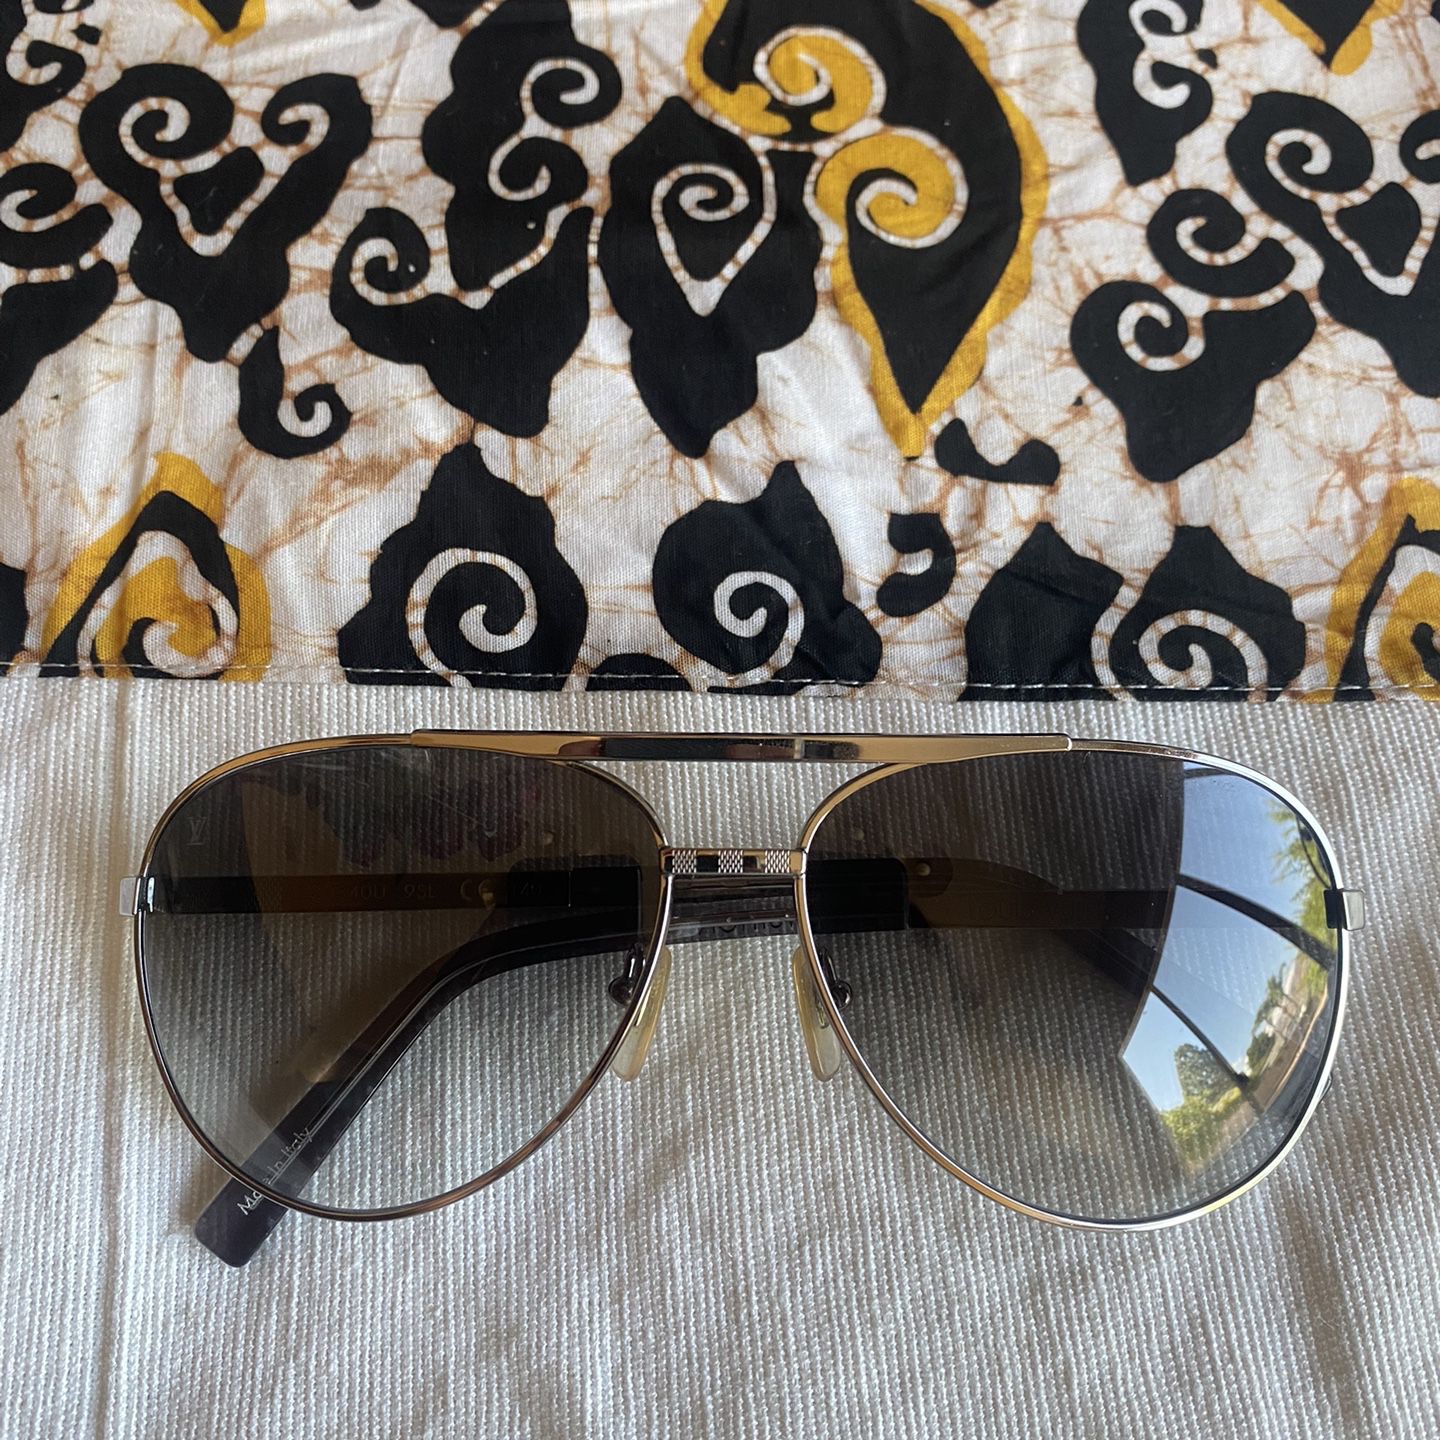 Louis Vuitton Attitude Pilot Sunglasses for Sale in San Dimas, CA